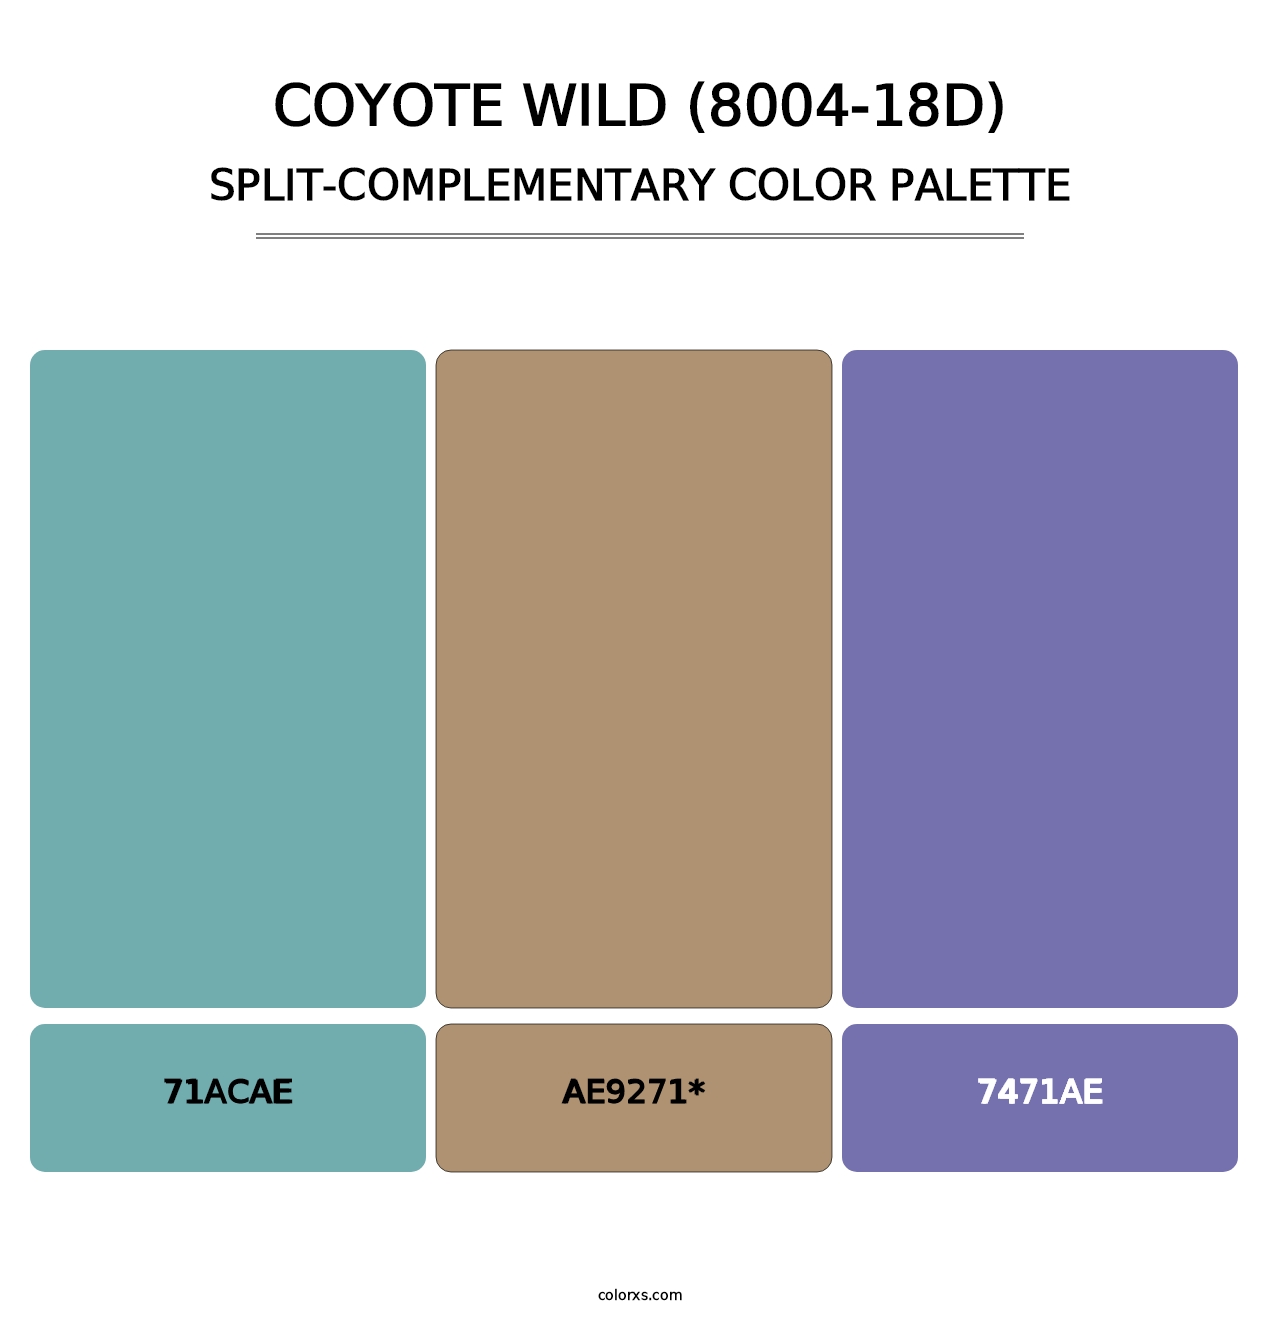 Coyote Wild (8004-18D) - Split-Complementary Color Palette